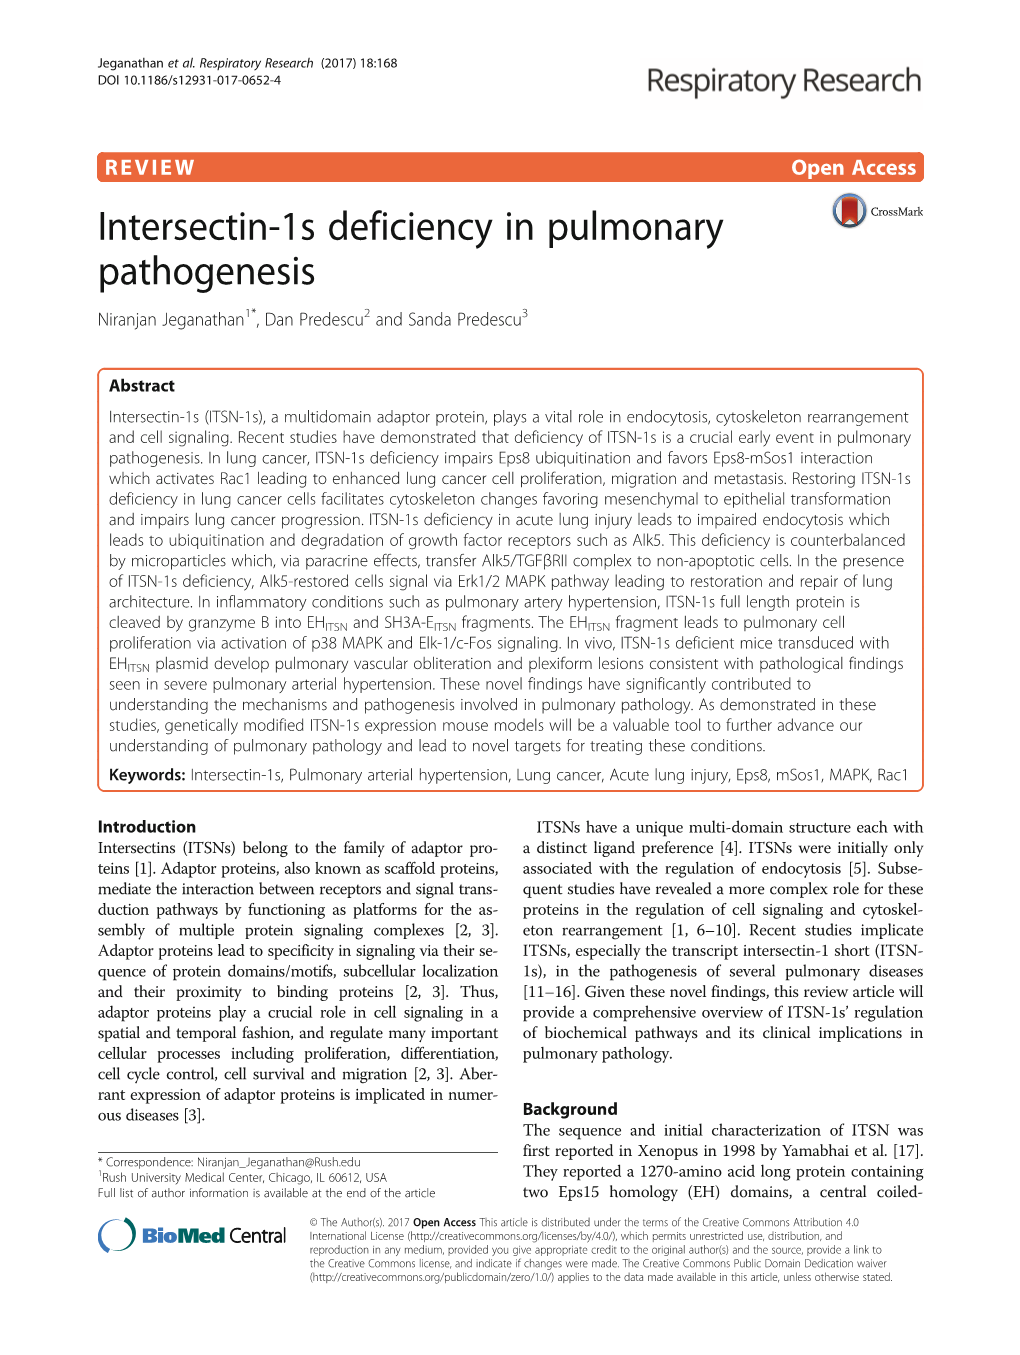 Intersectin-1S Deficiency in Pulmonary Pathogenesis Niranjan Jeganathan1*, Dan Predescu2 and Sanda Predescu3